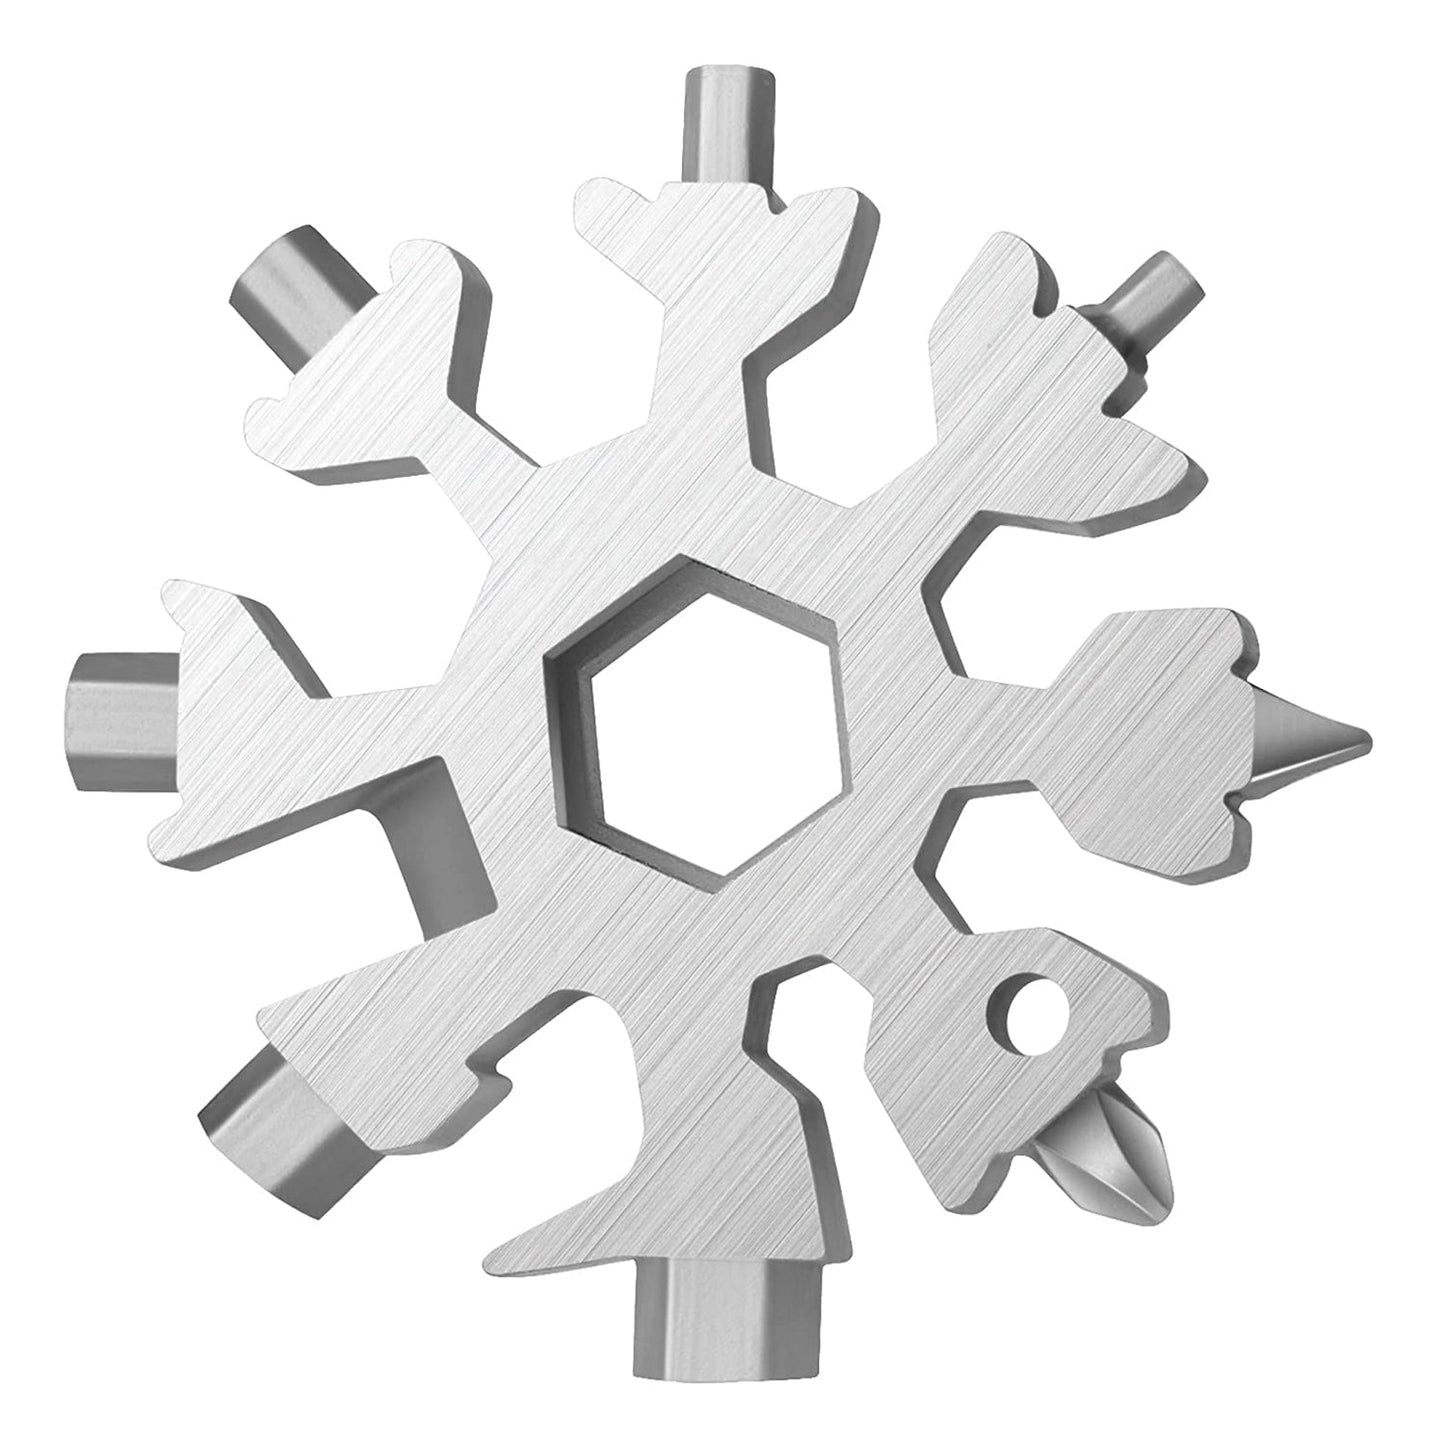 Snowflake Multi-Tool Stainless Steel